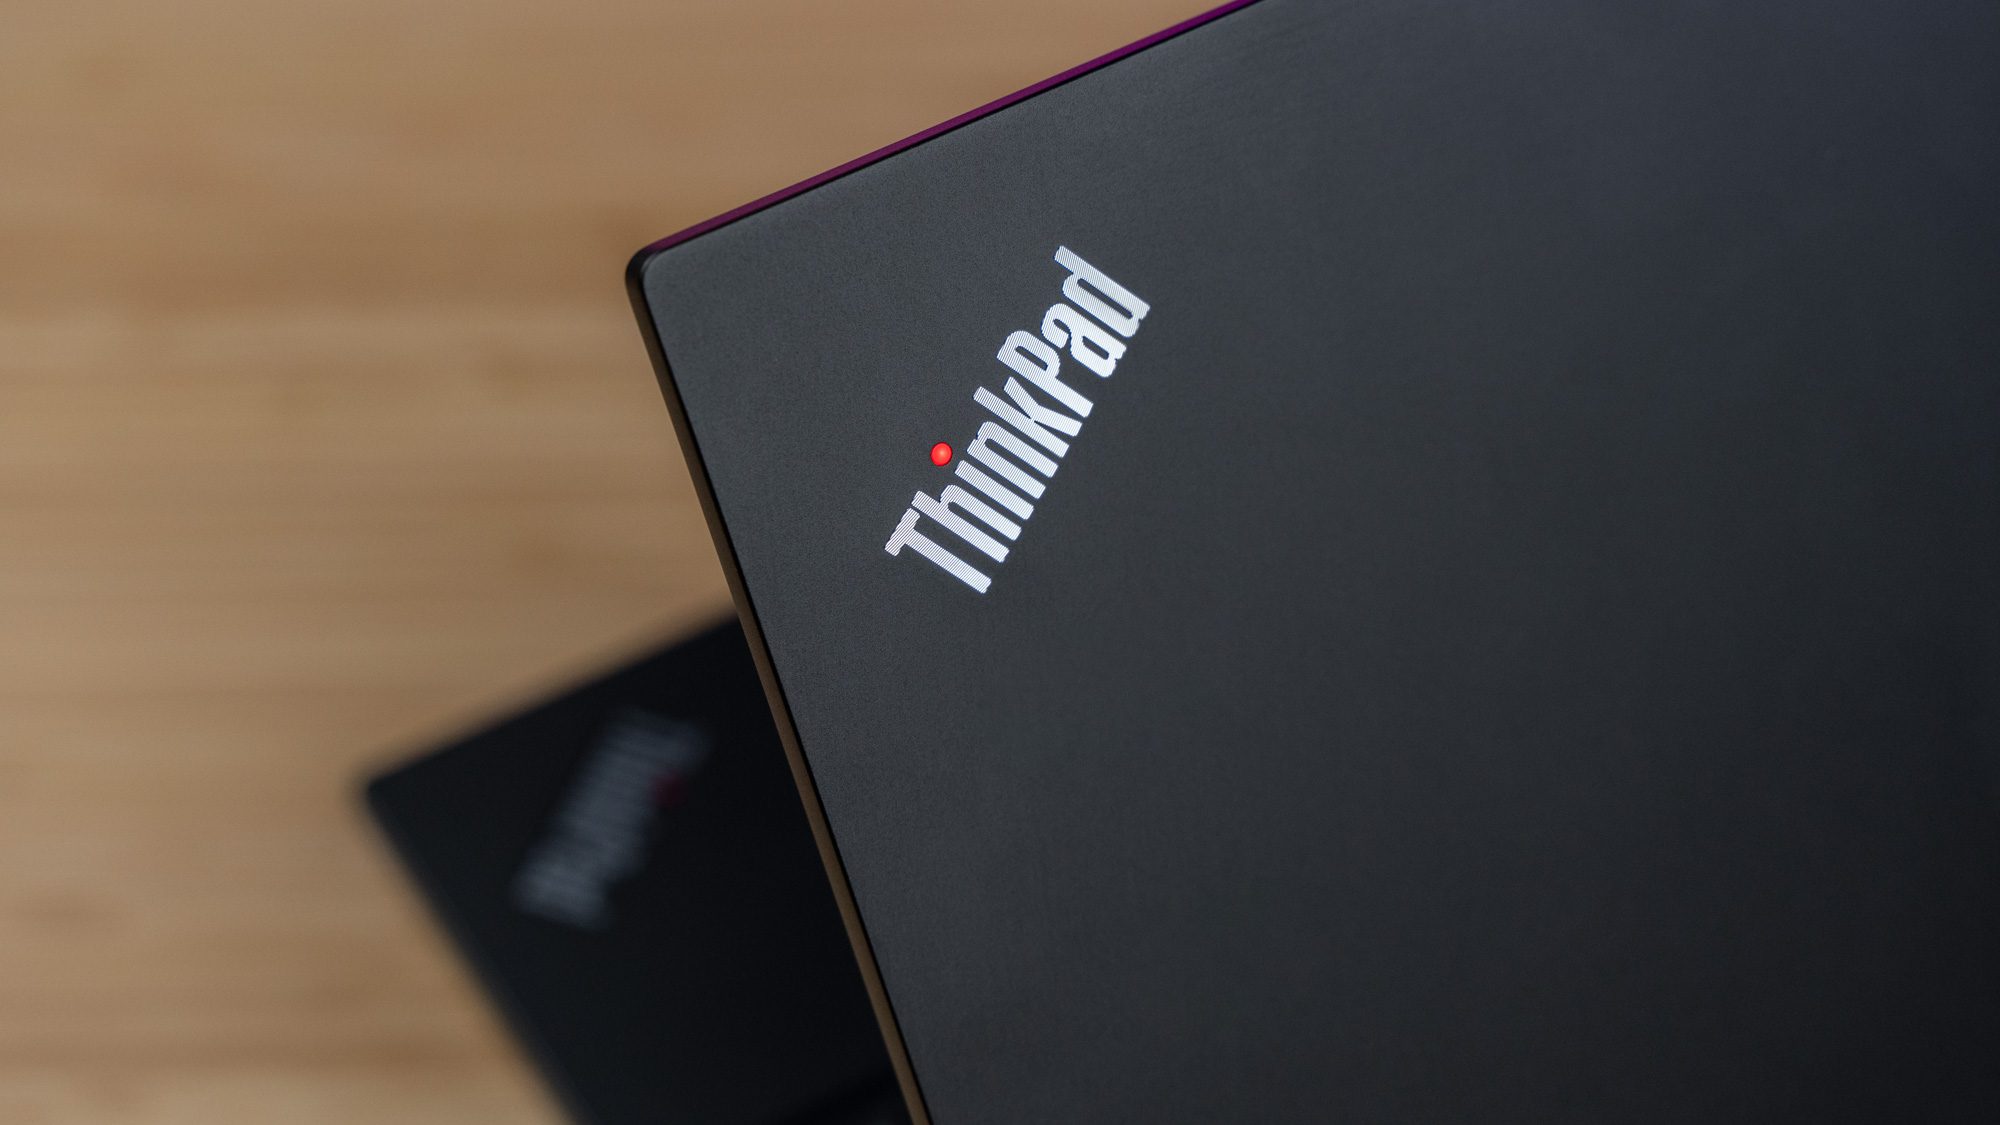 ThinkPad-Logo mit roter LED auf dem Cover.